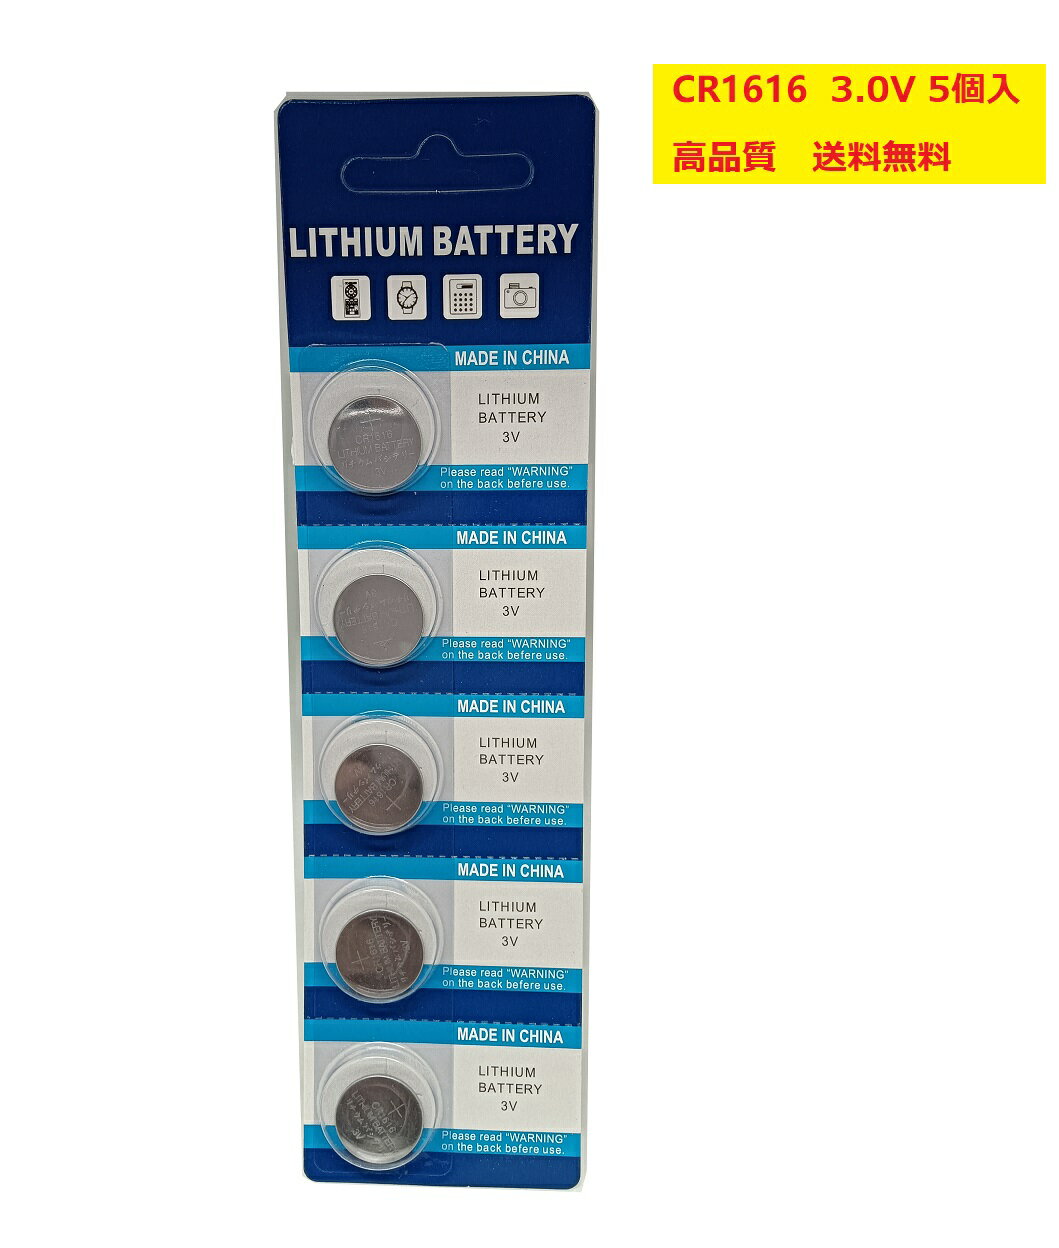 WASHODO リチウムボタン電池 CR1616 3.0V 高品質 10個セット 格安販売 90日間無償品質保証付き 当日発送対応 送料無料 発送状況追跡可能 有効期限5年間 パッケージ5個入タイプ